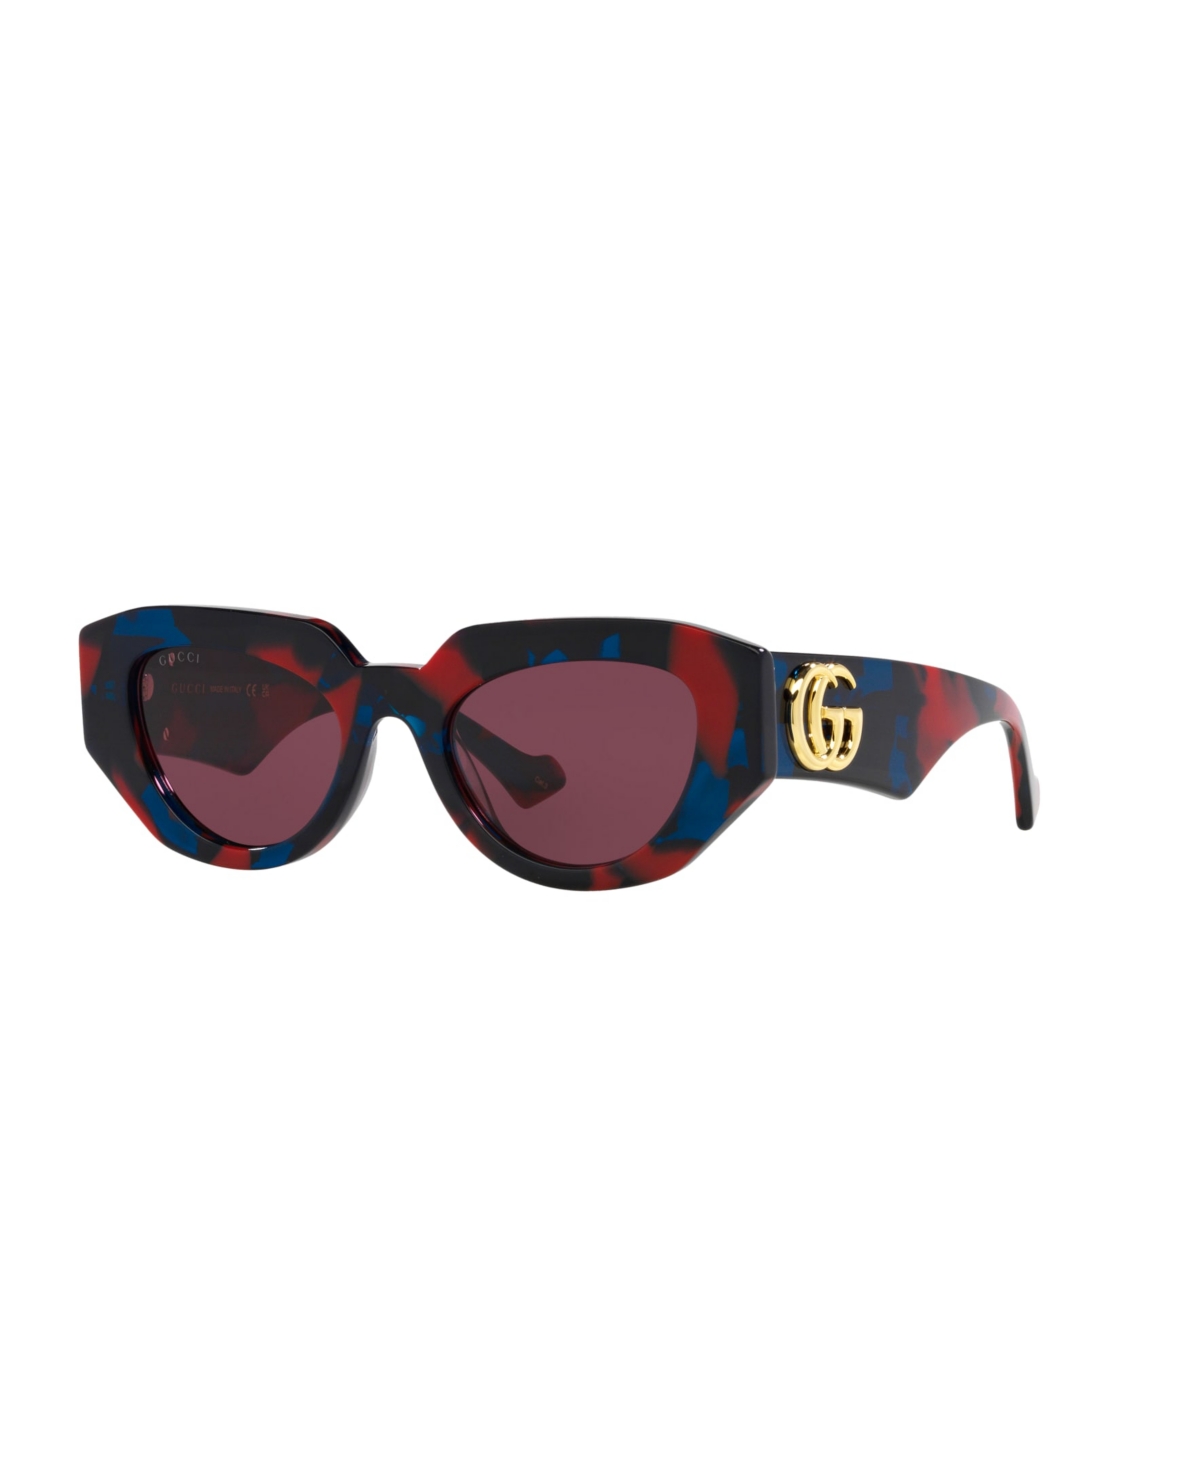 Women's Sunglasses, Gg1421S Gc002107 - Tortoise